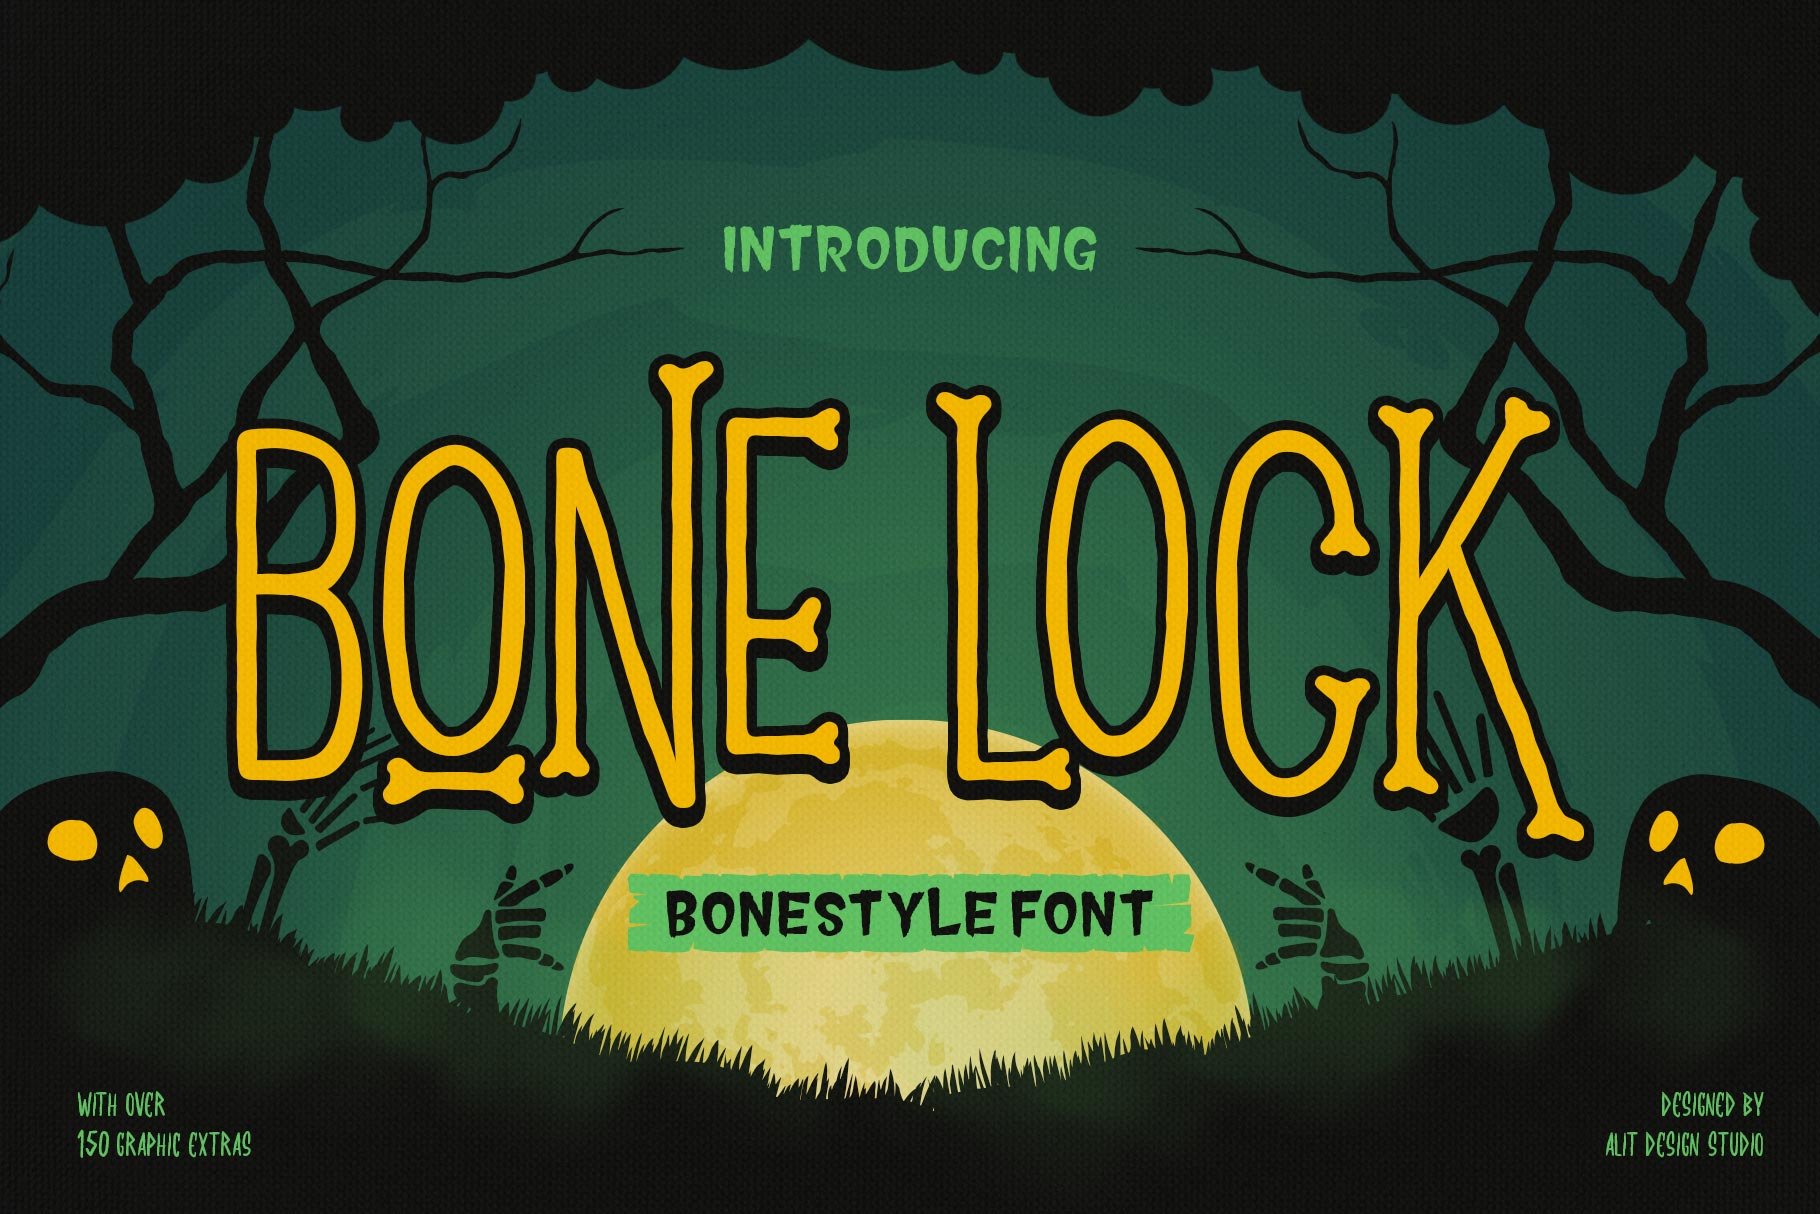 Bone Lock Halloween Font cover image.